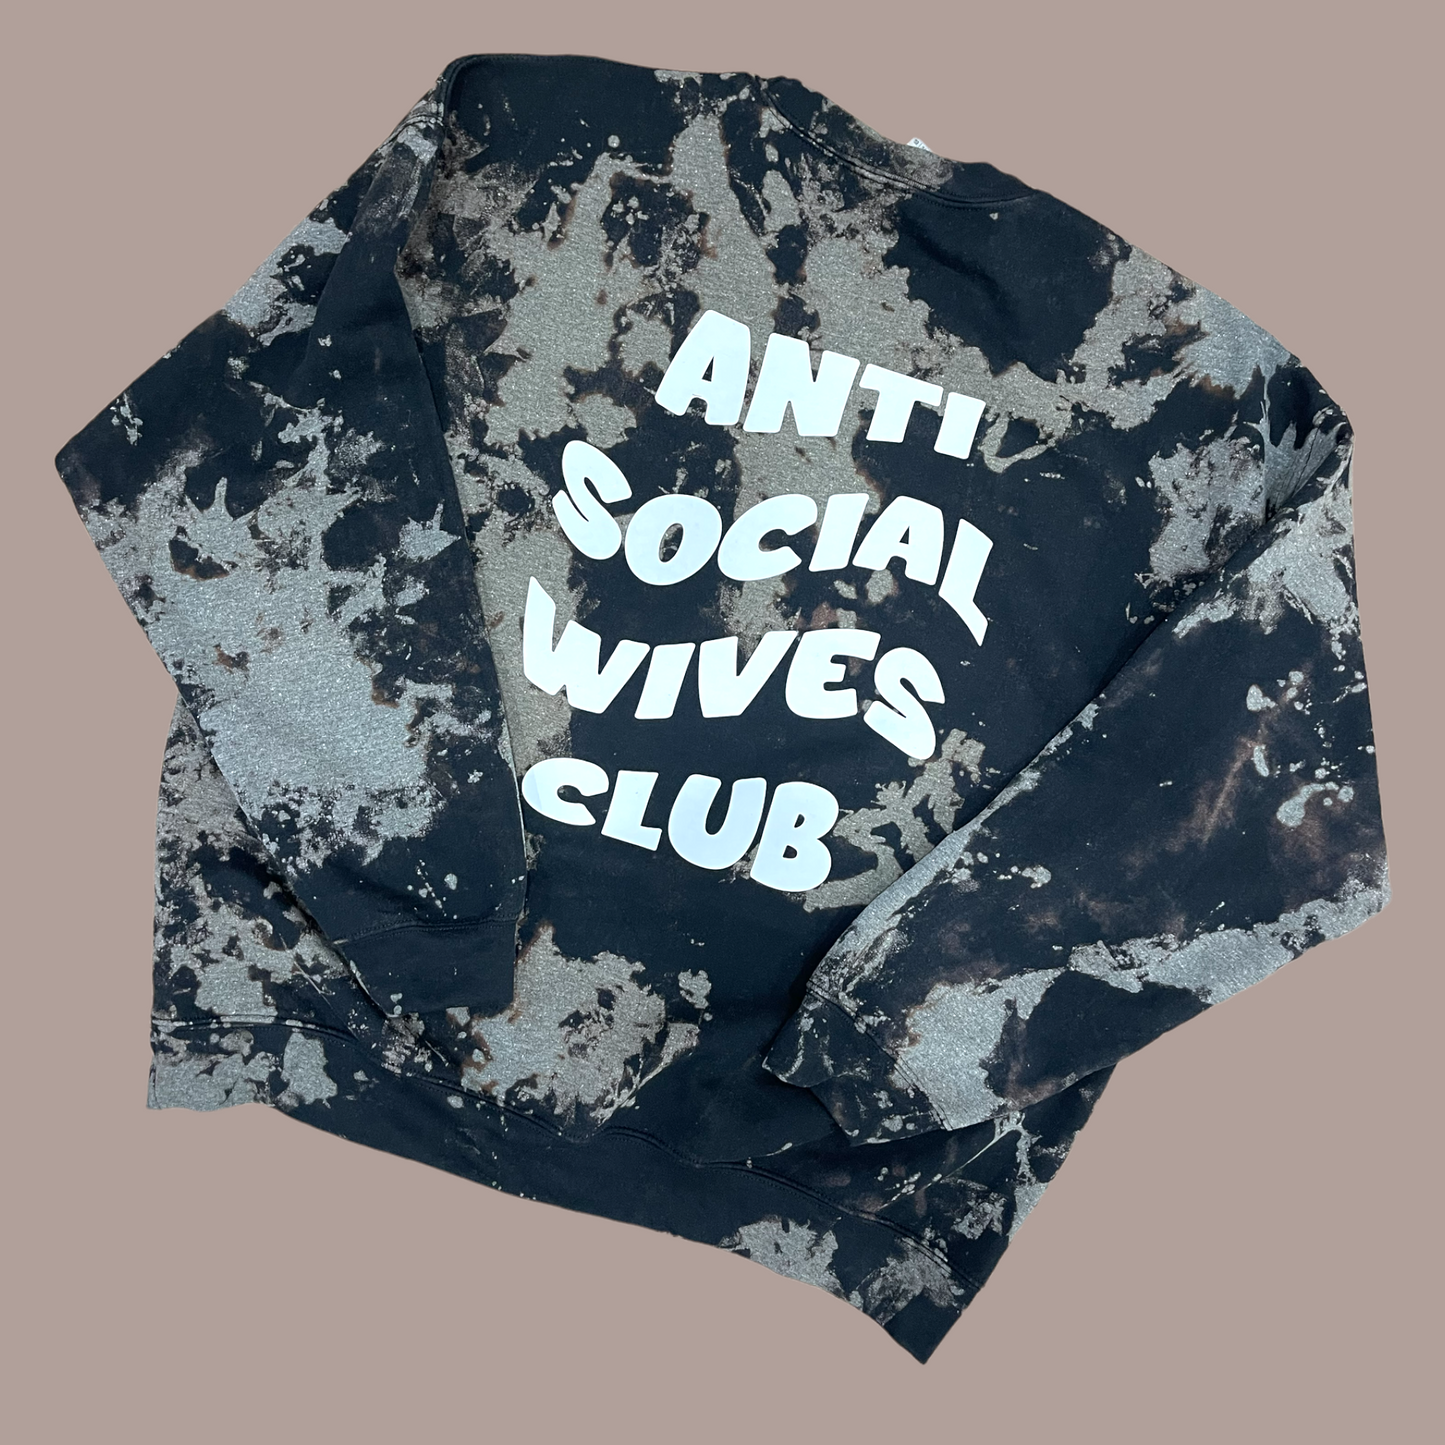 Anti social wives club